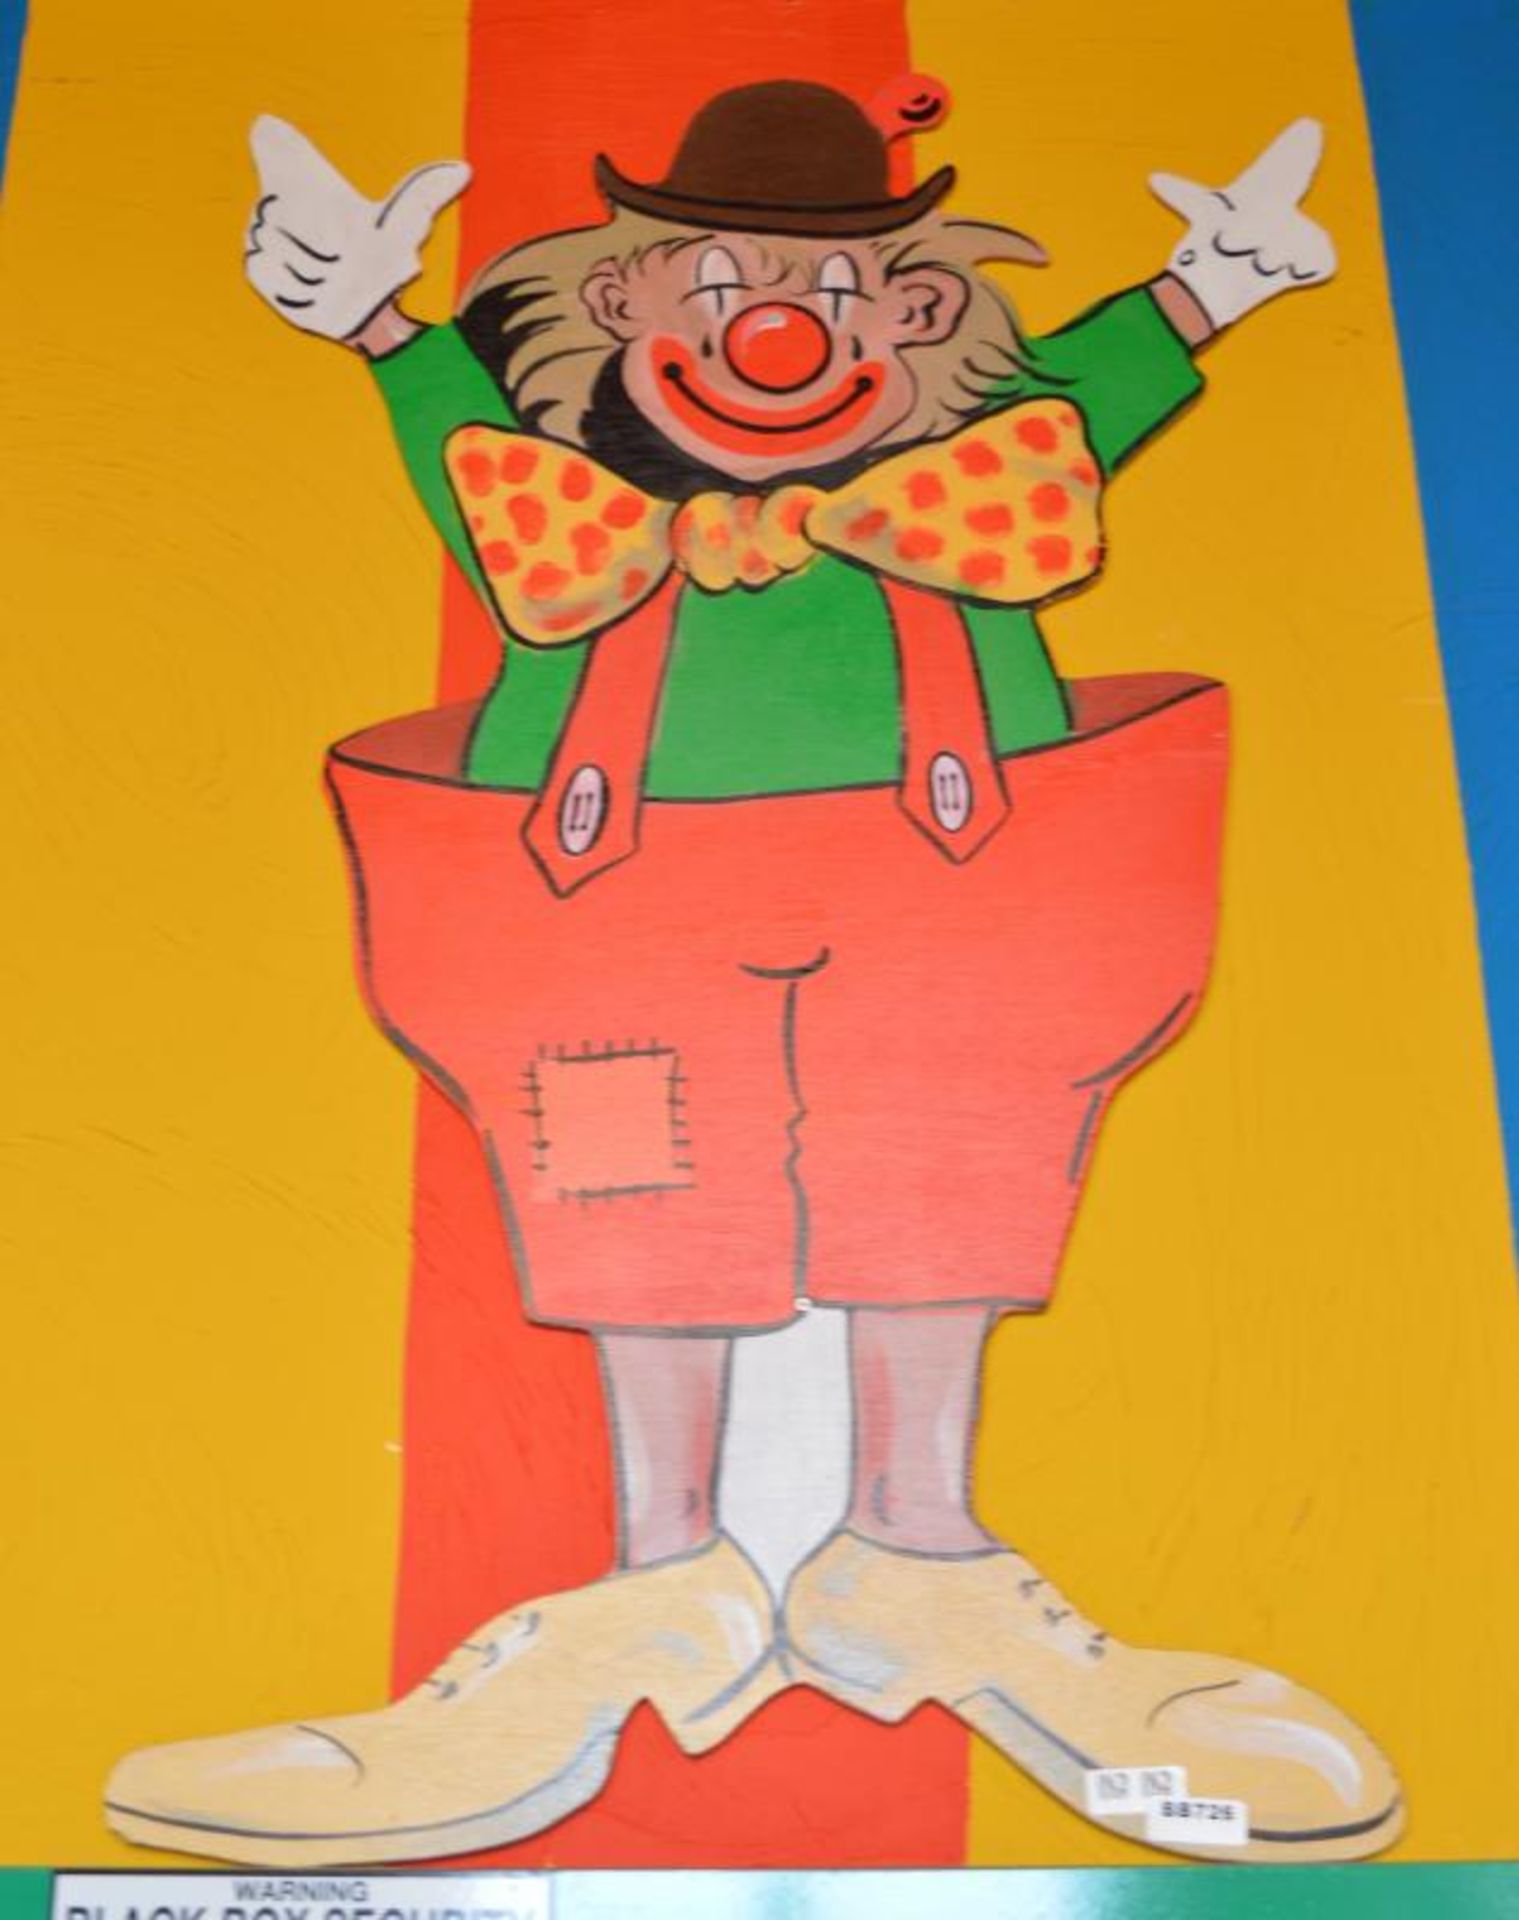 1 x Wooden Clown Painted Cut Out - Sze: 4 x 2ft - Ref BB726 - CL351 - Location: Chorley PR6